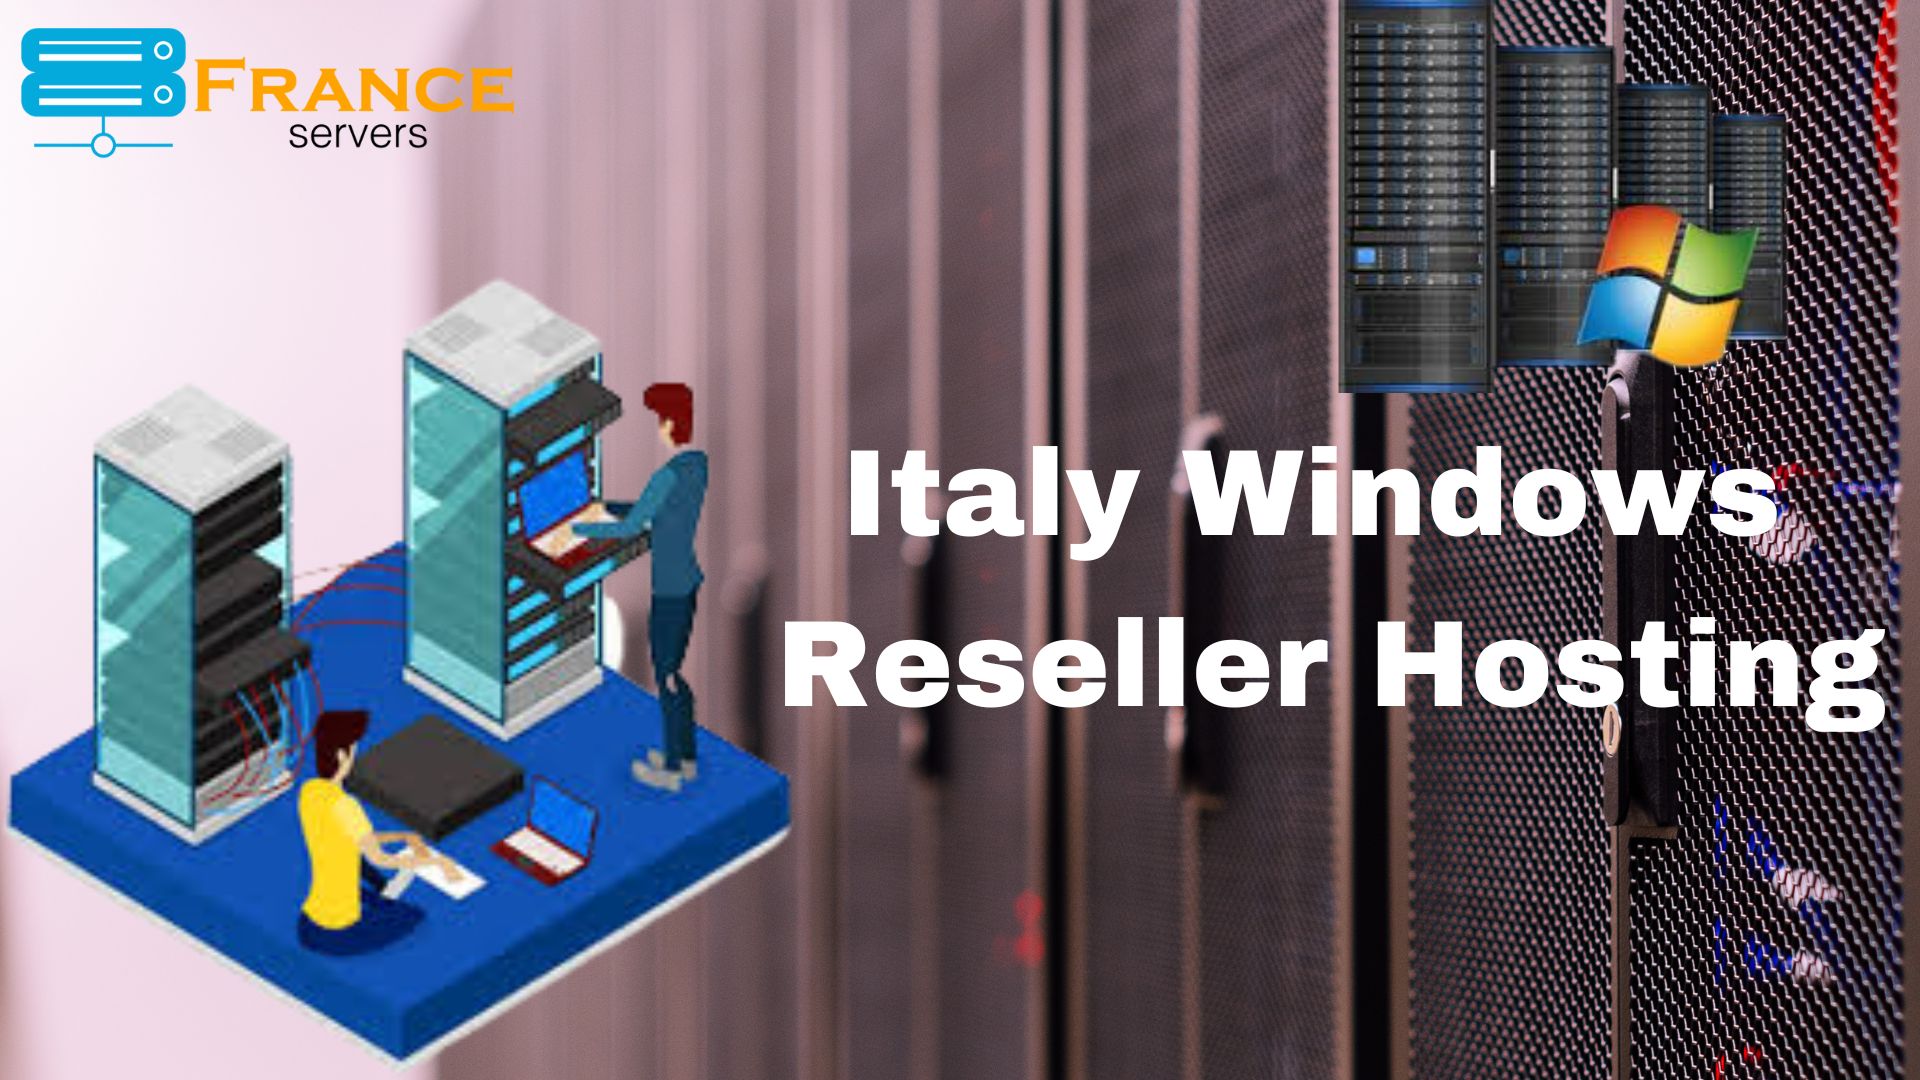 Italy Windows Reseller Hosting